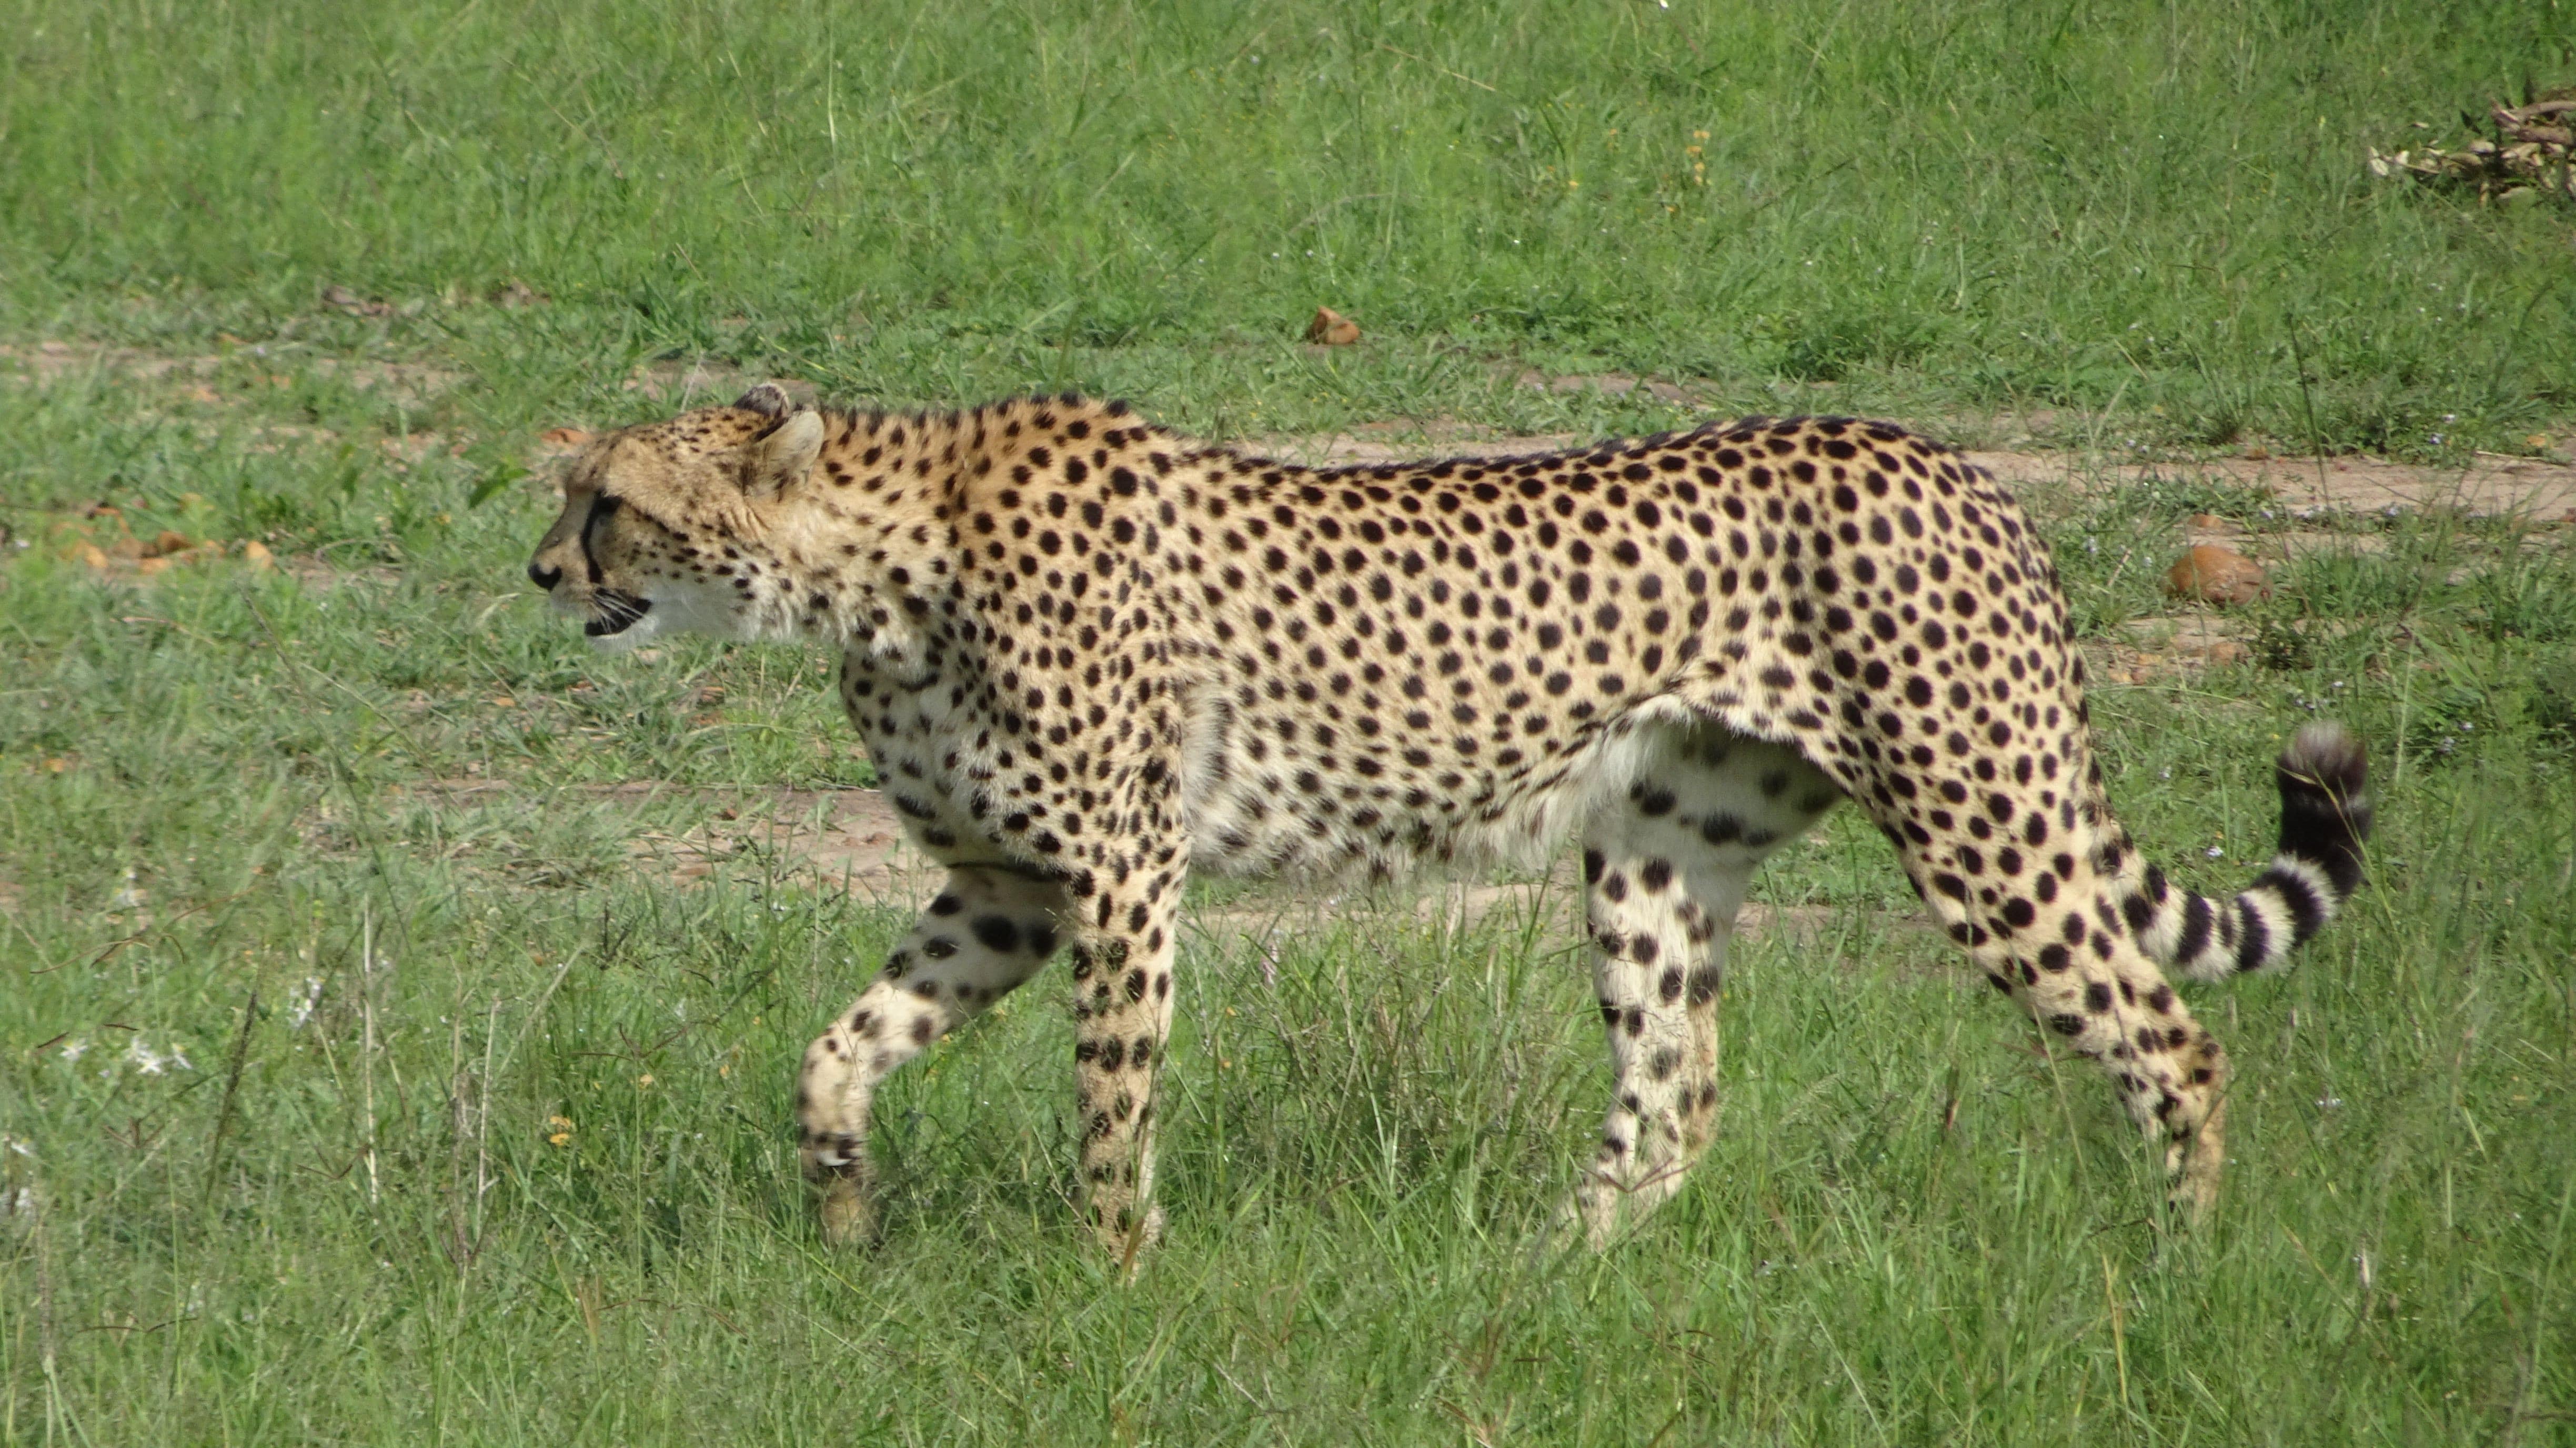 During a mid-day safari ride  a beautiful cheetah was spotted on the Maasai Mara.